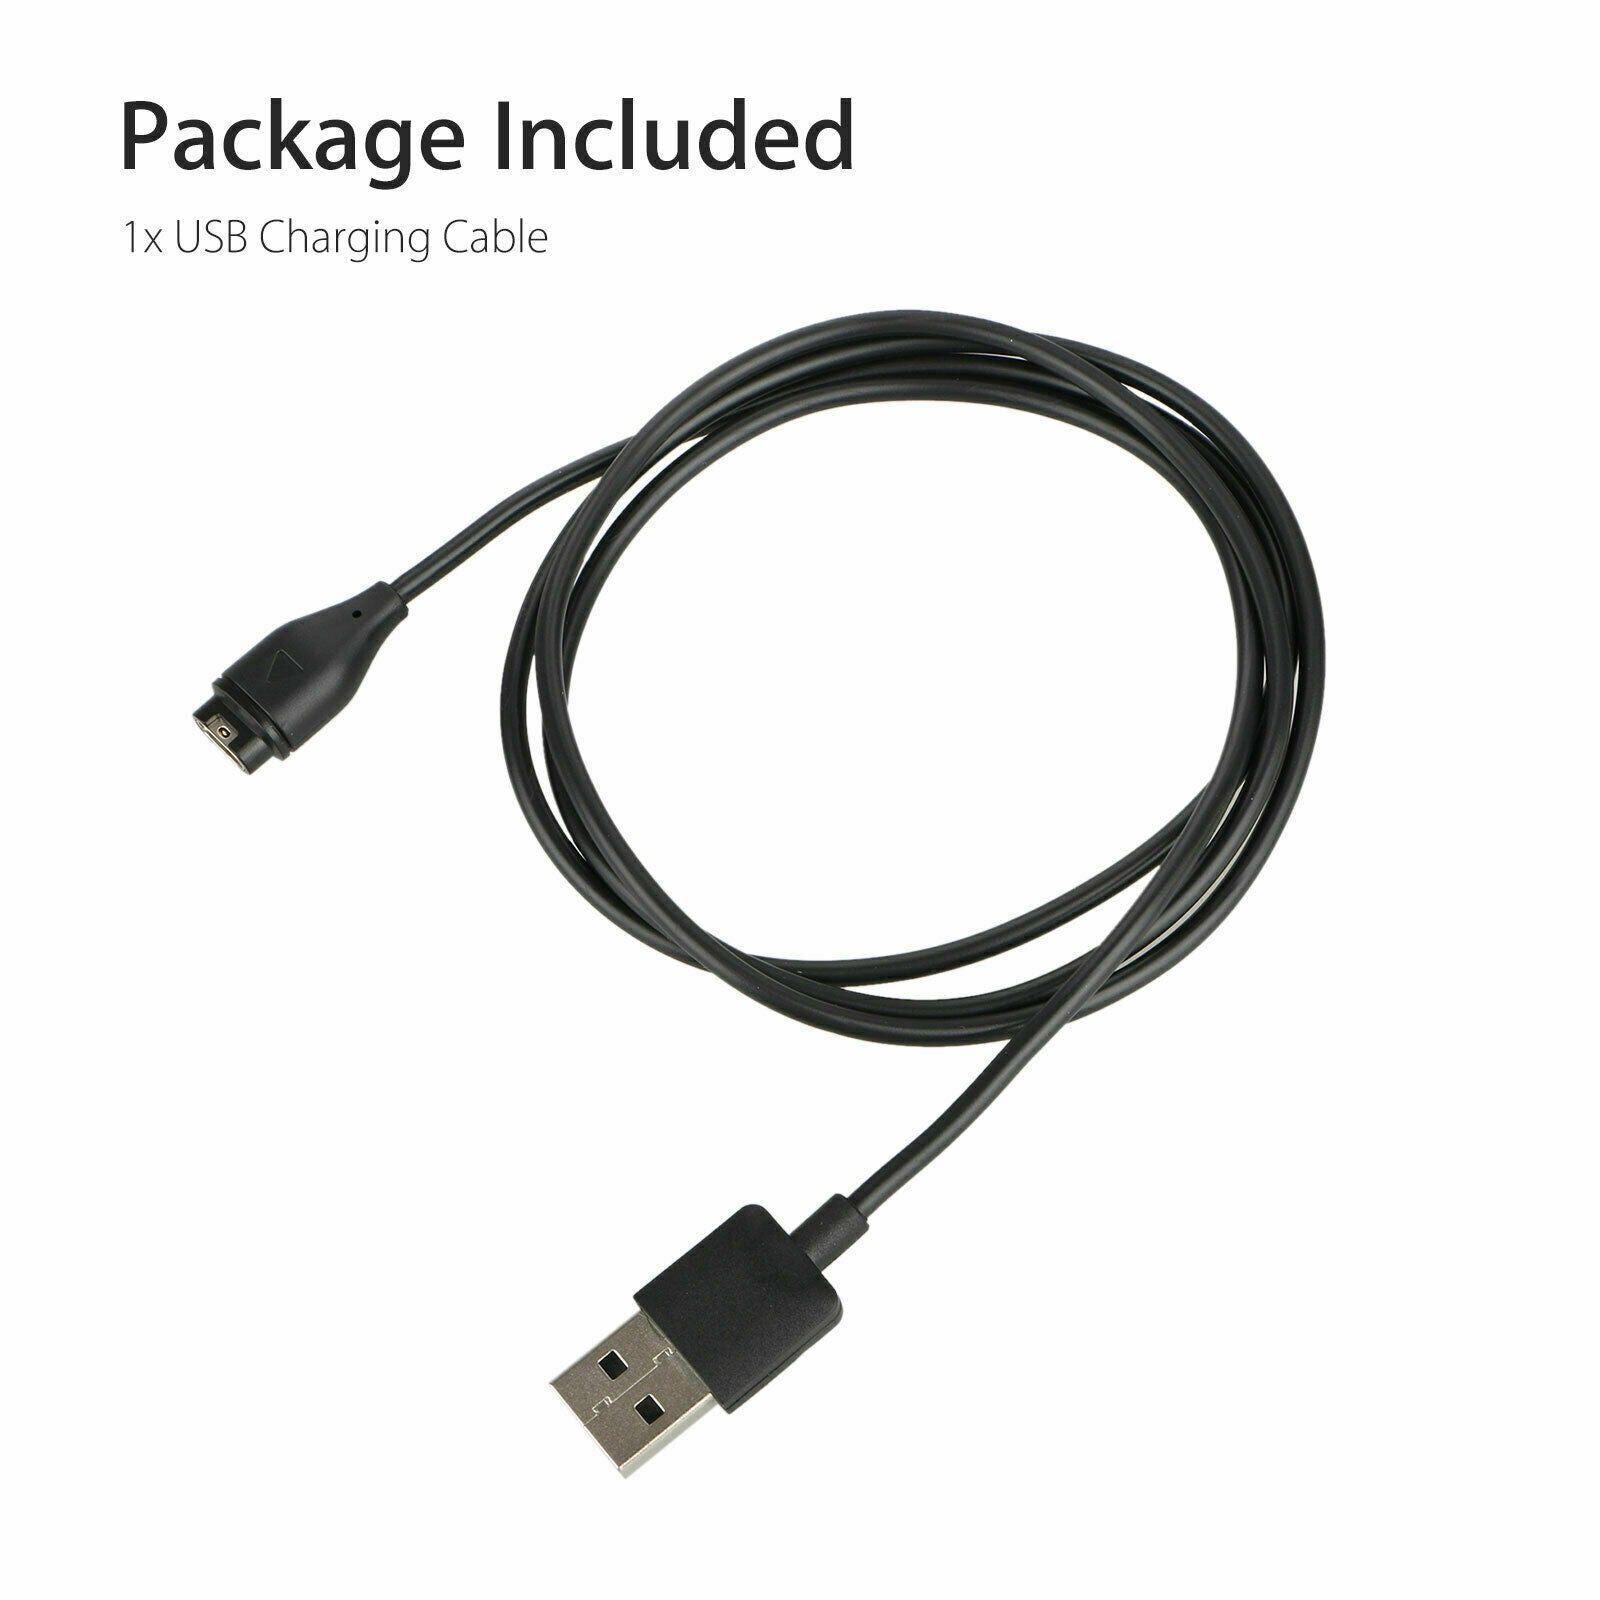 USB Charger Charging Cord for Garmin Fenix 5/5S/5X Vivoactive 3 Vivosport Watch